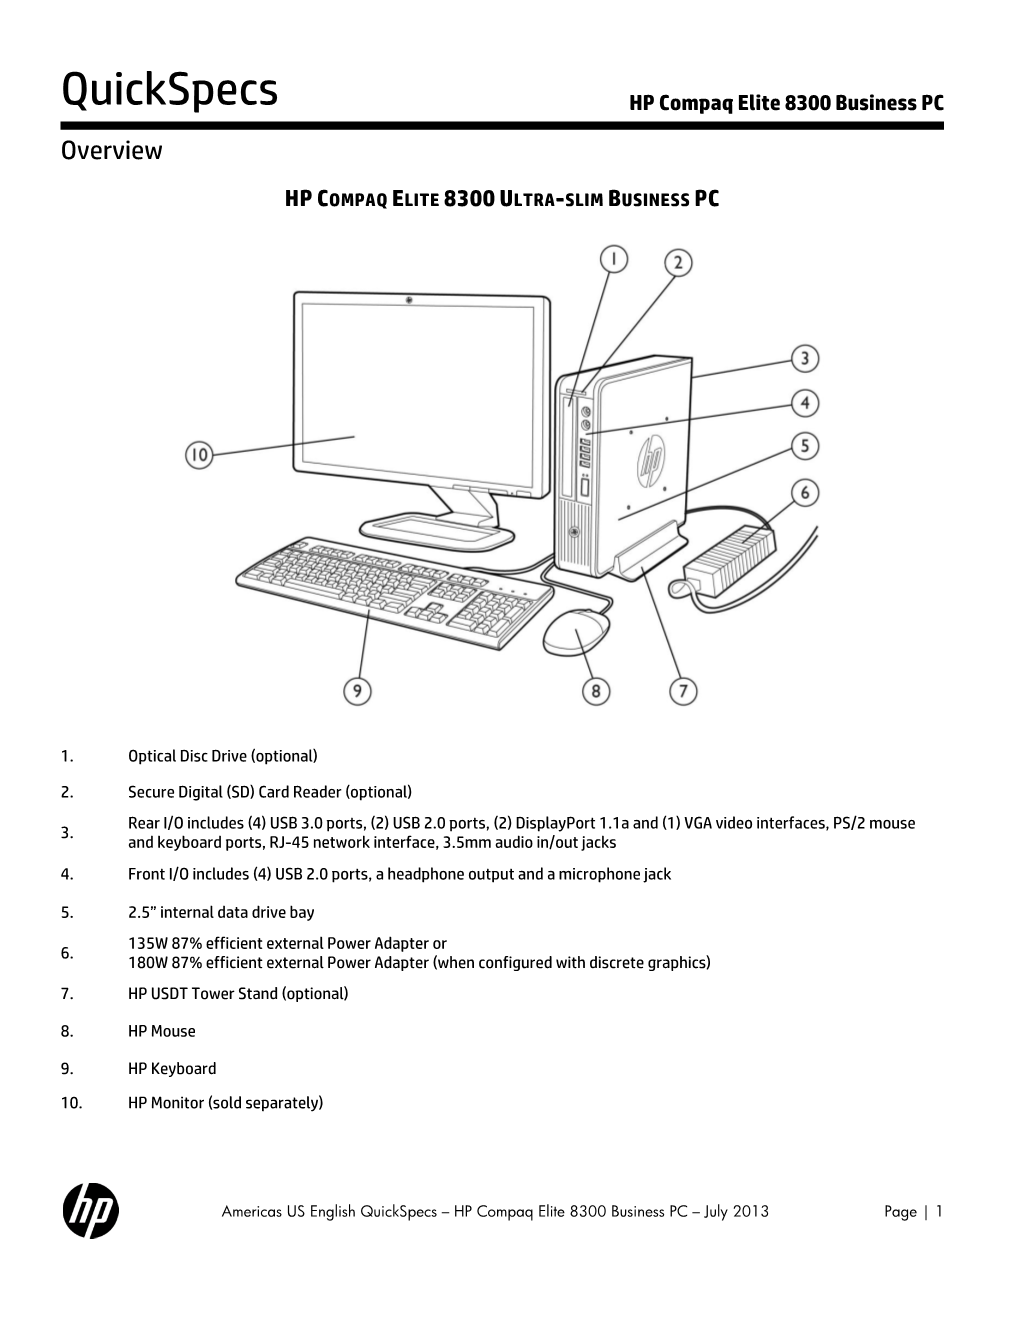 Quickspecs HP Compaq Elite 8300 Business PC